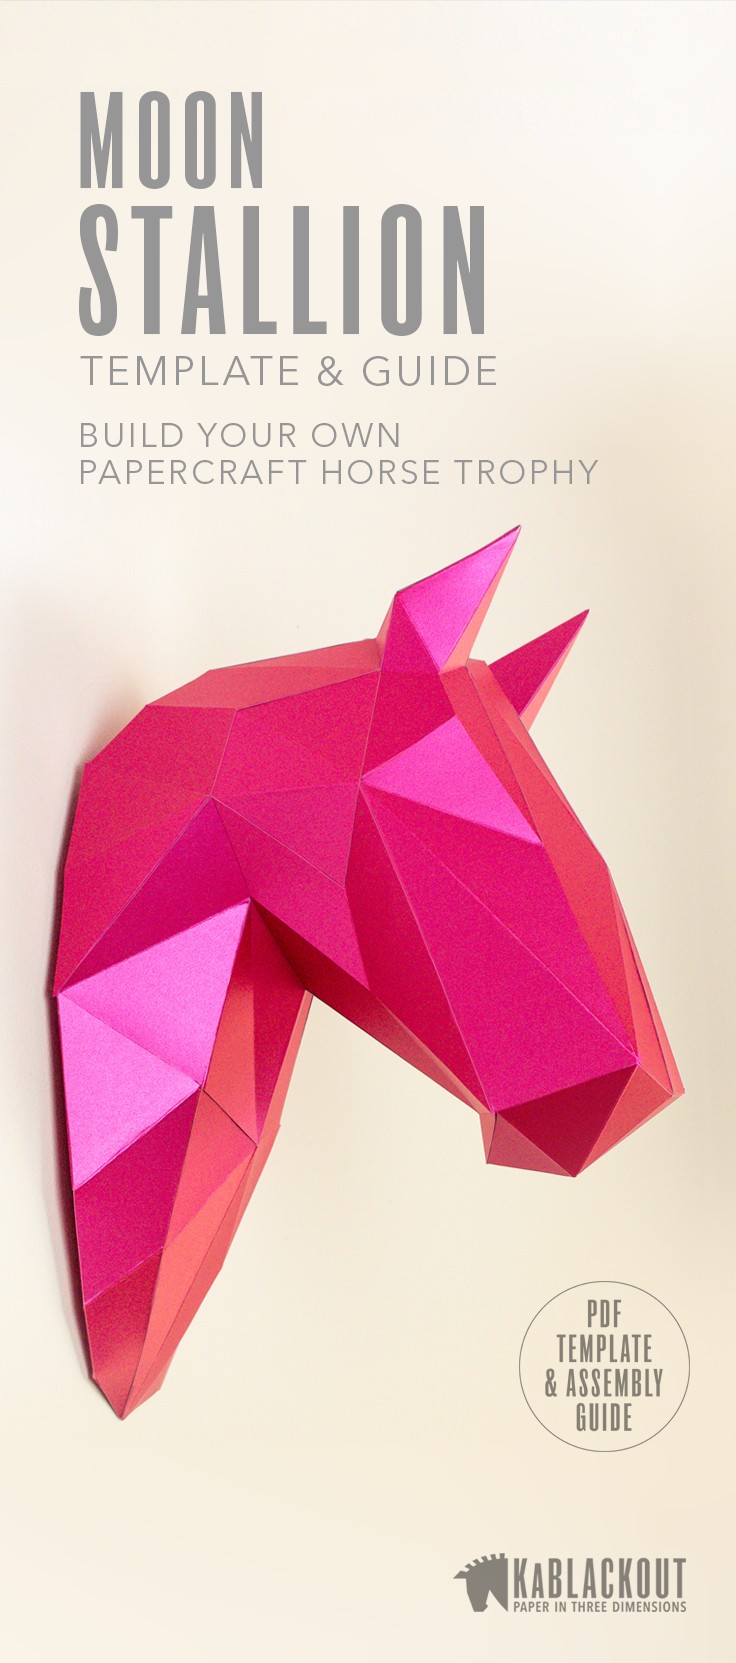 Diy Papercraft Horse Papercraft Diy Horse Template Low Poly Horse 3d Wall Trophy